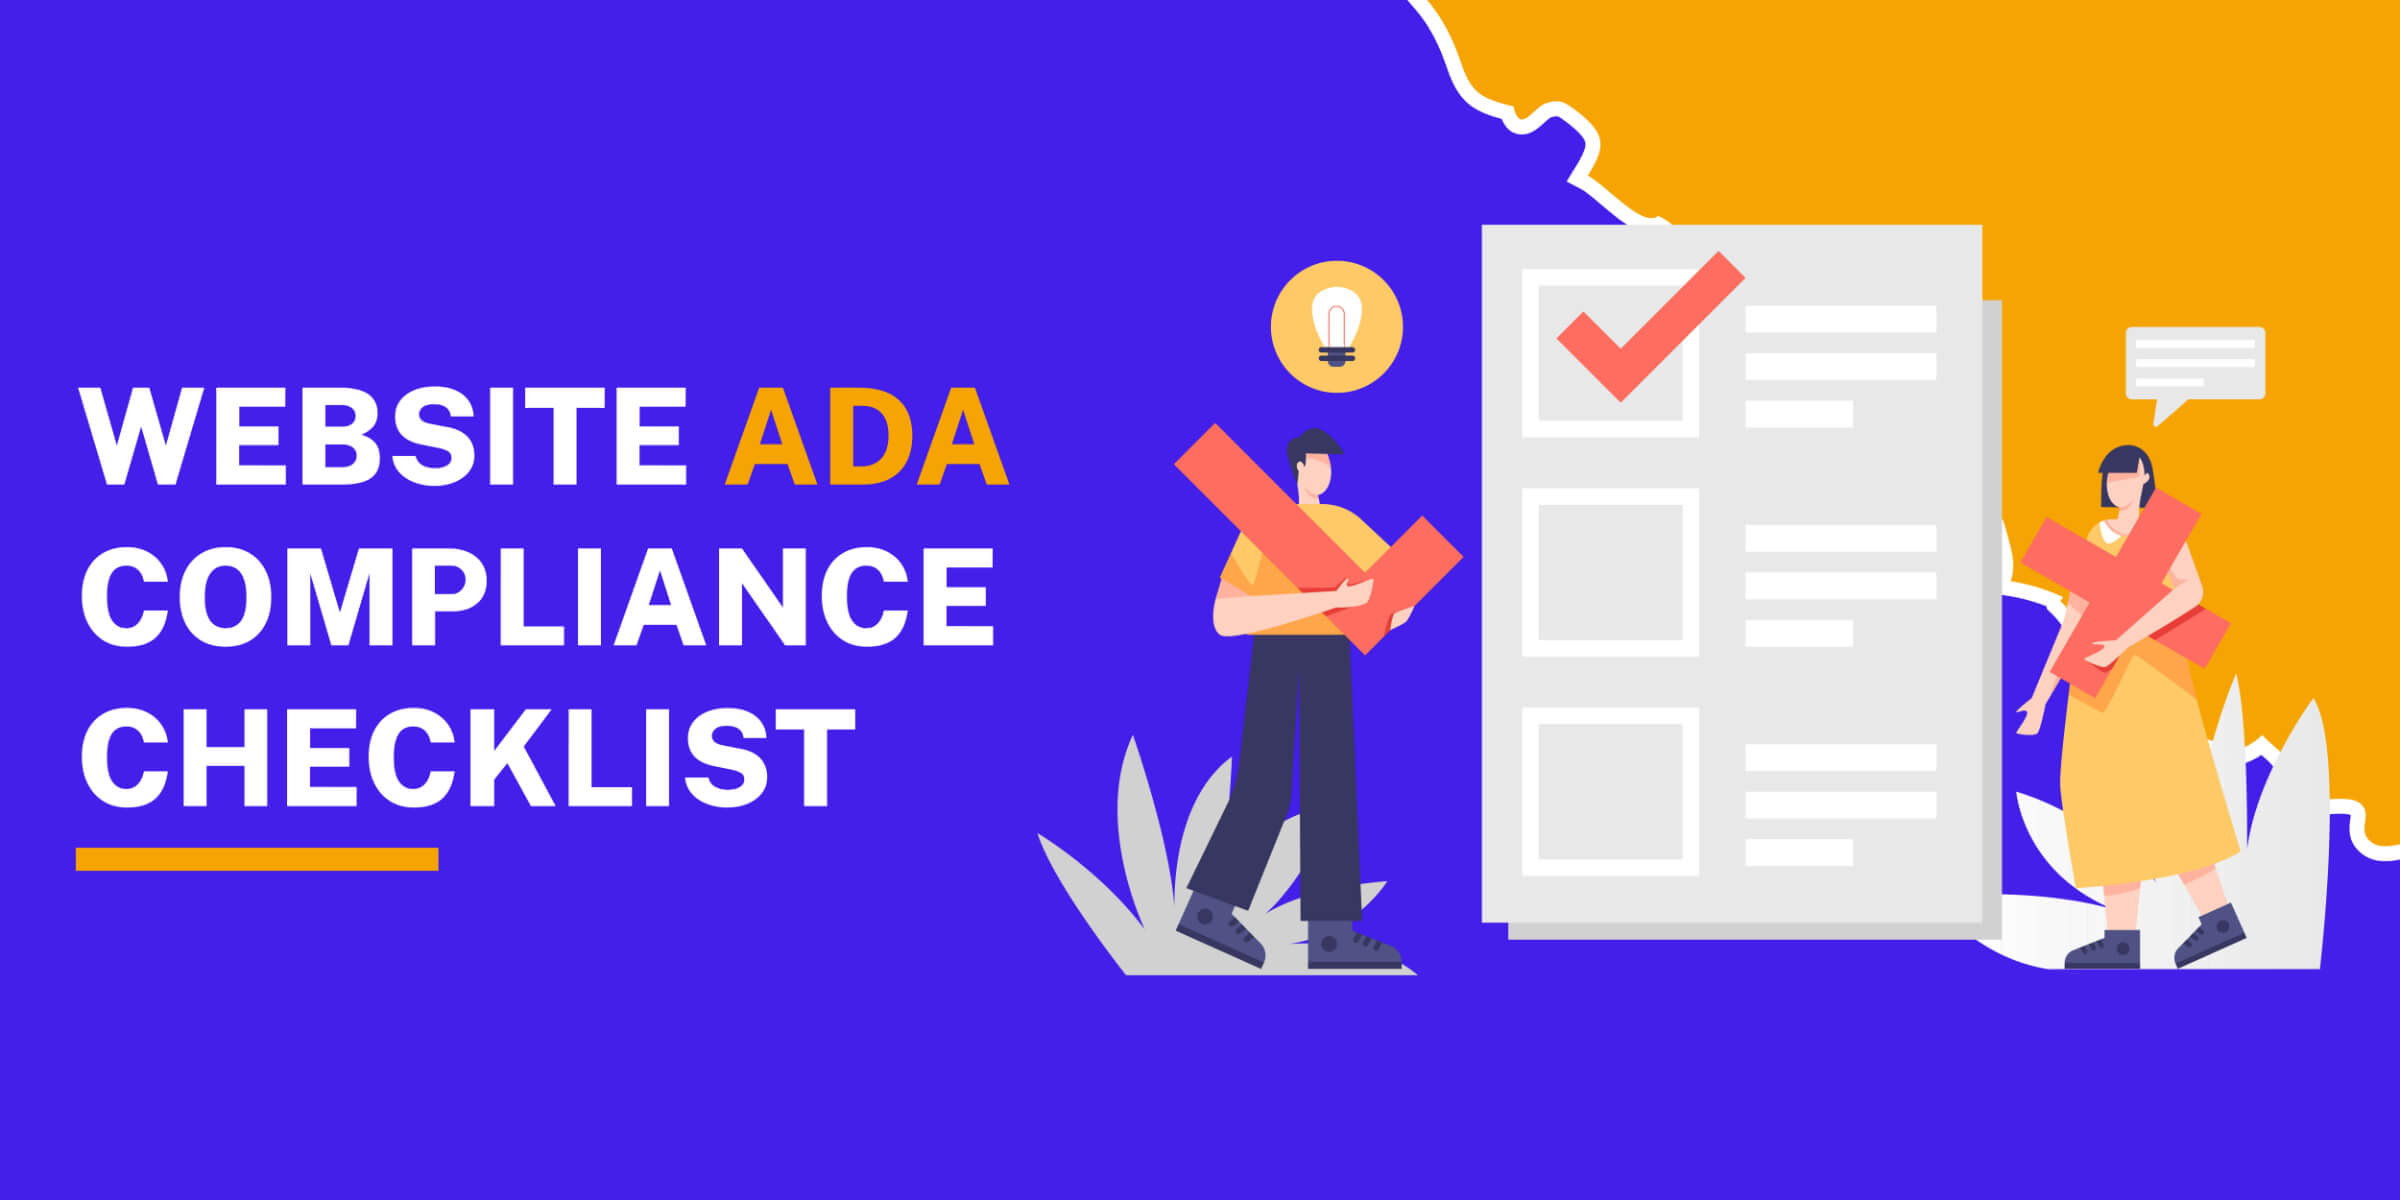 Website ADA Compliance Checklist